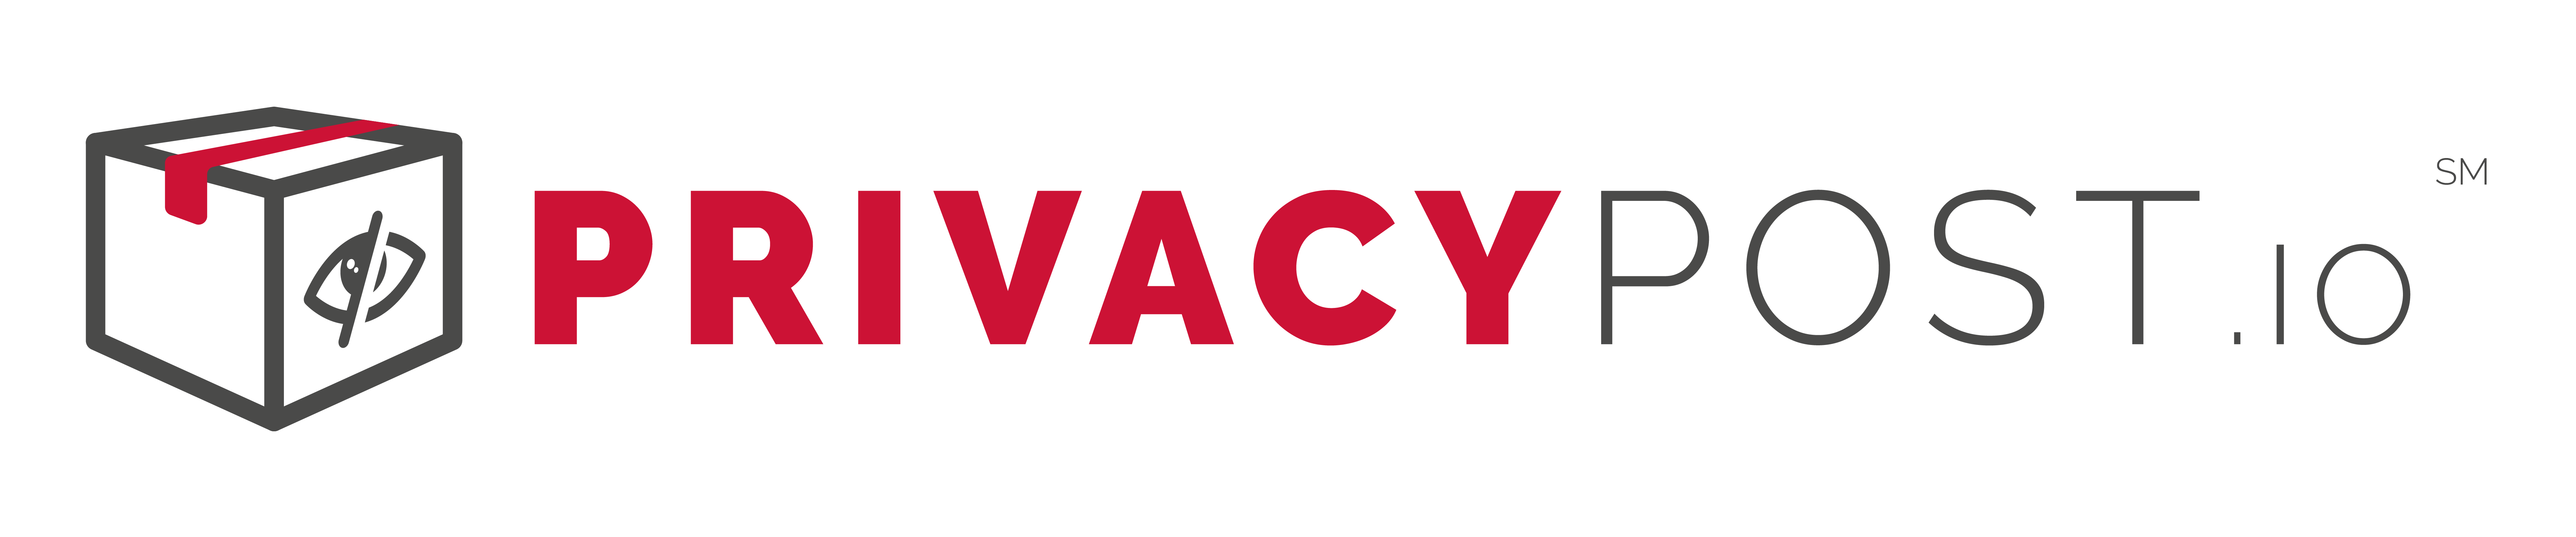 PrivacyPost.io logo